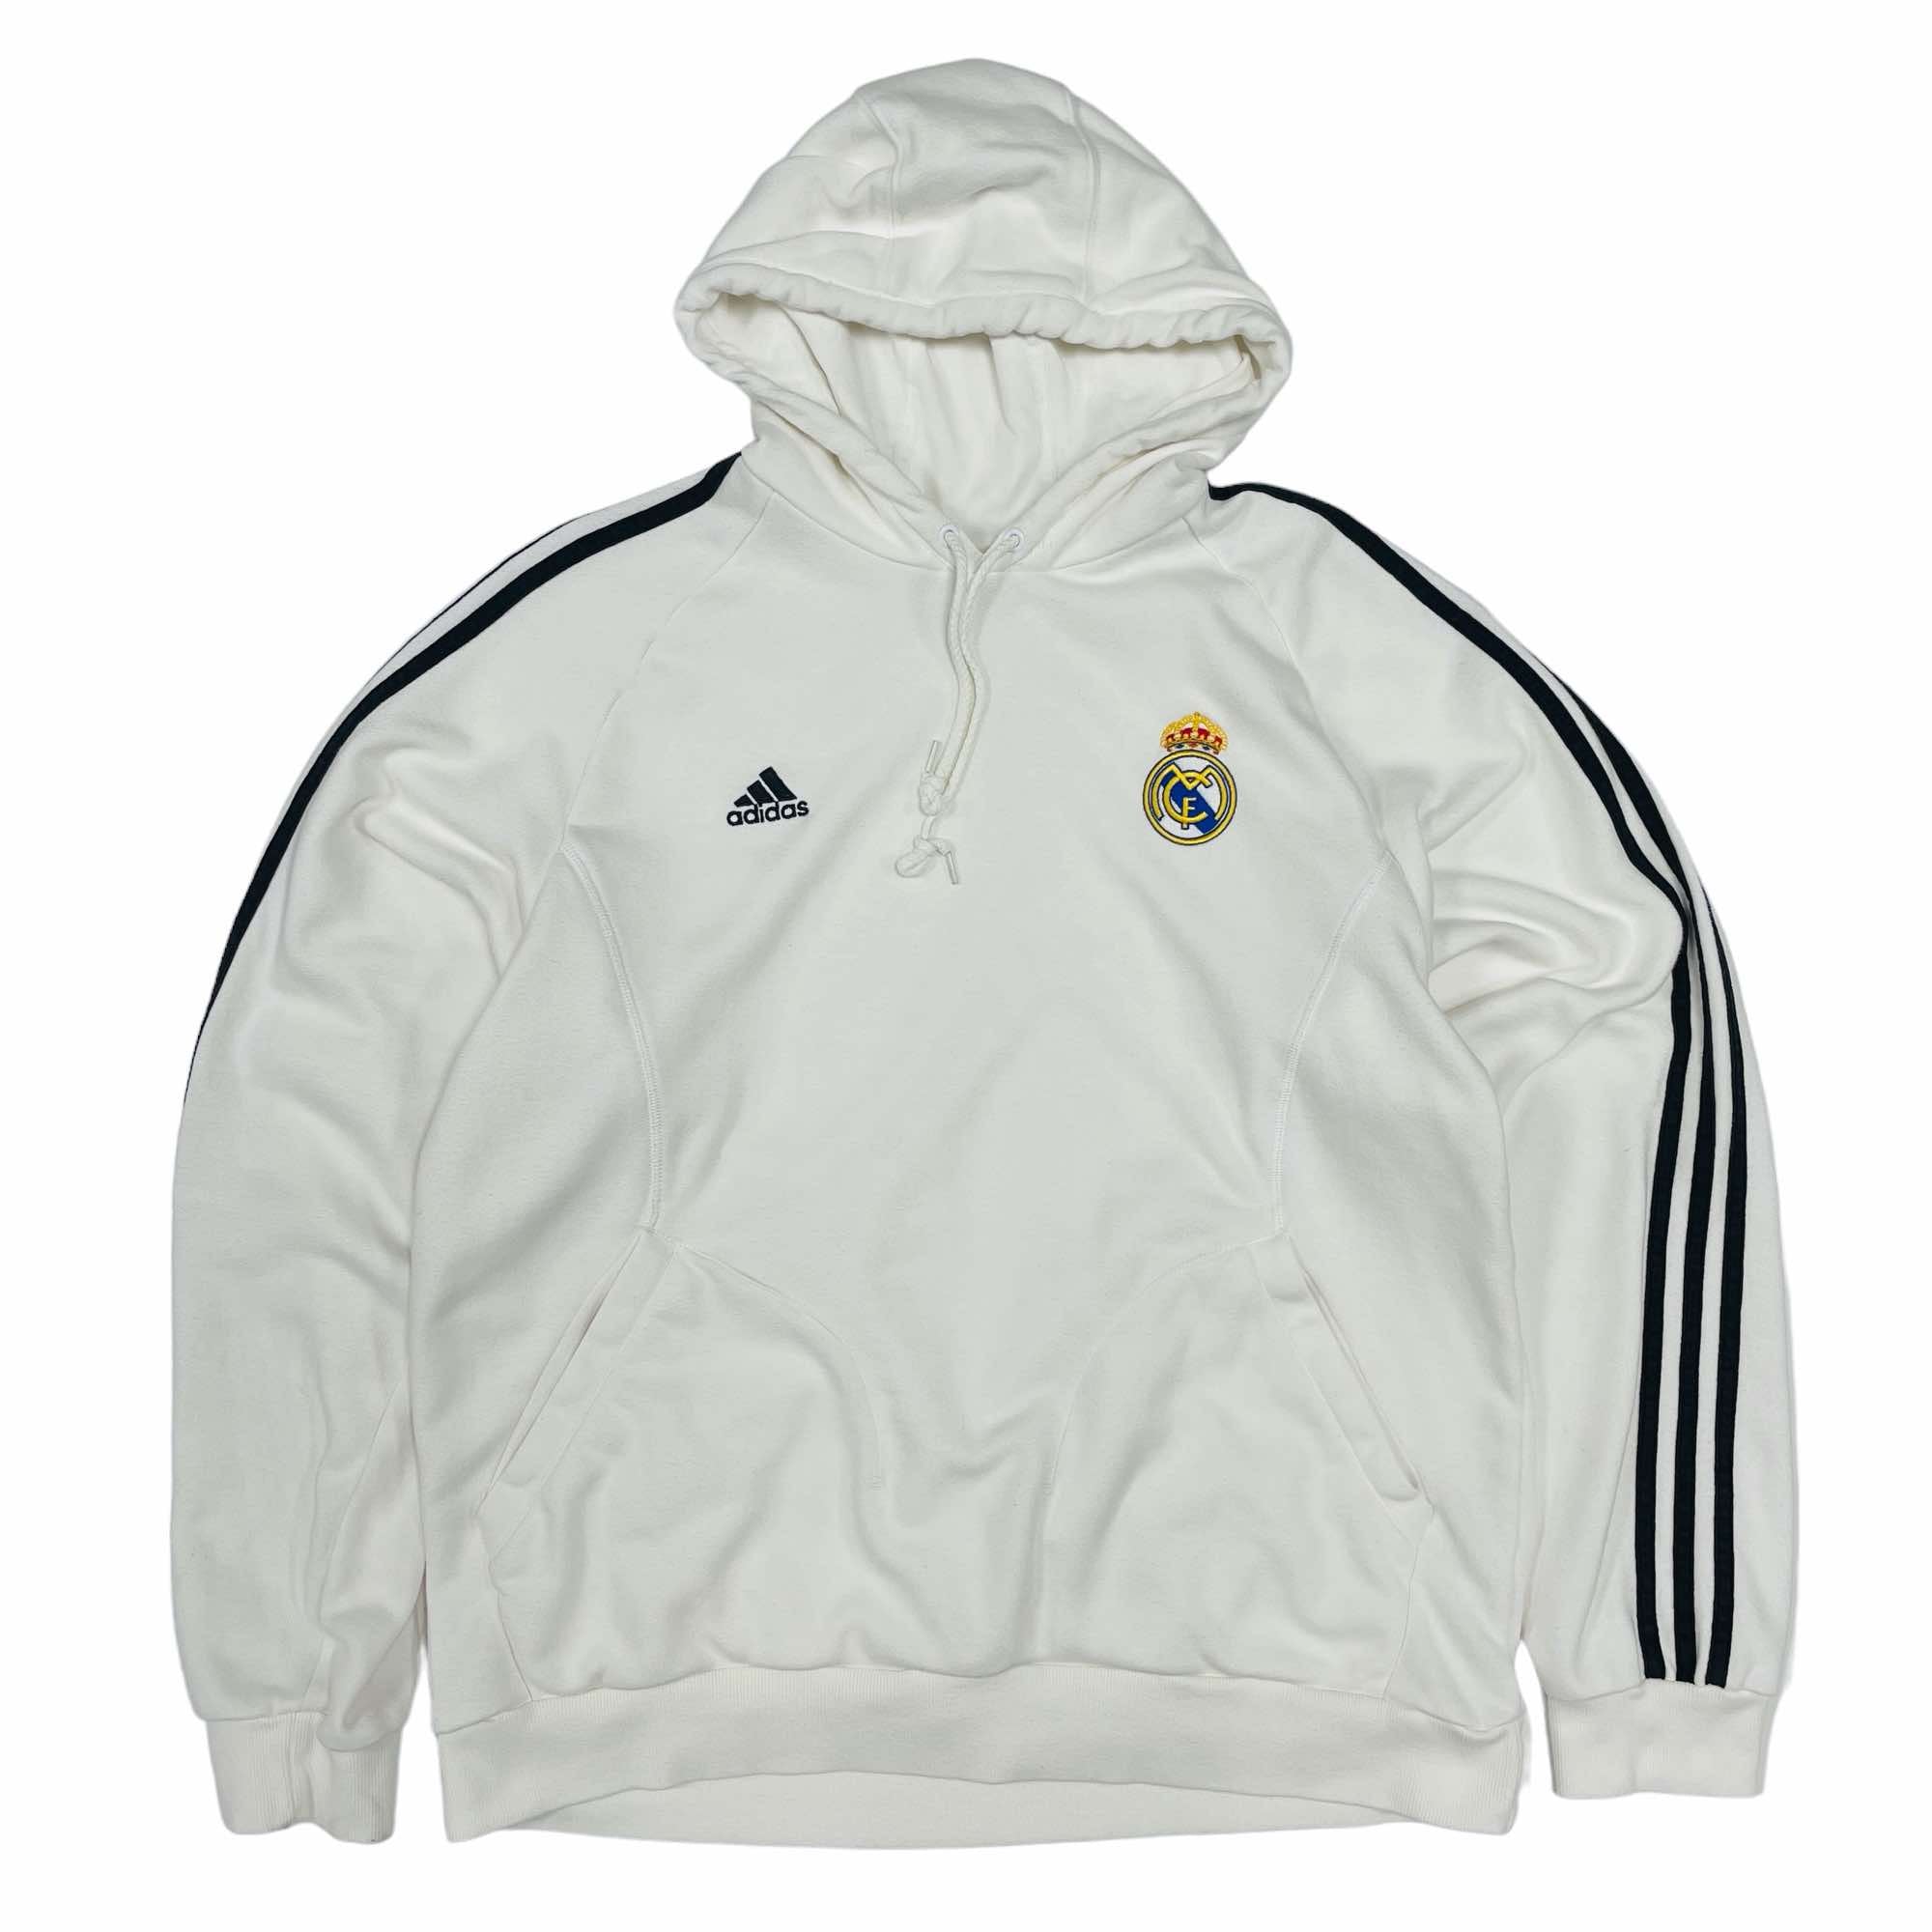 Real Madrid Adidas Hoodie - Large